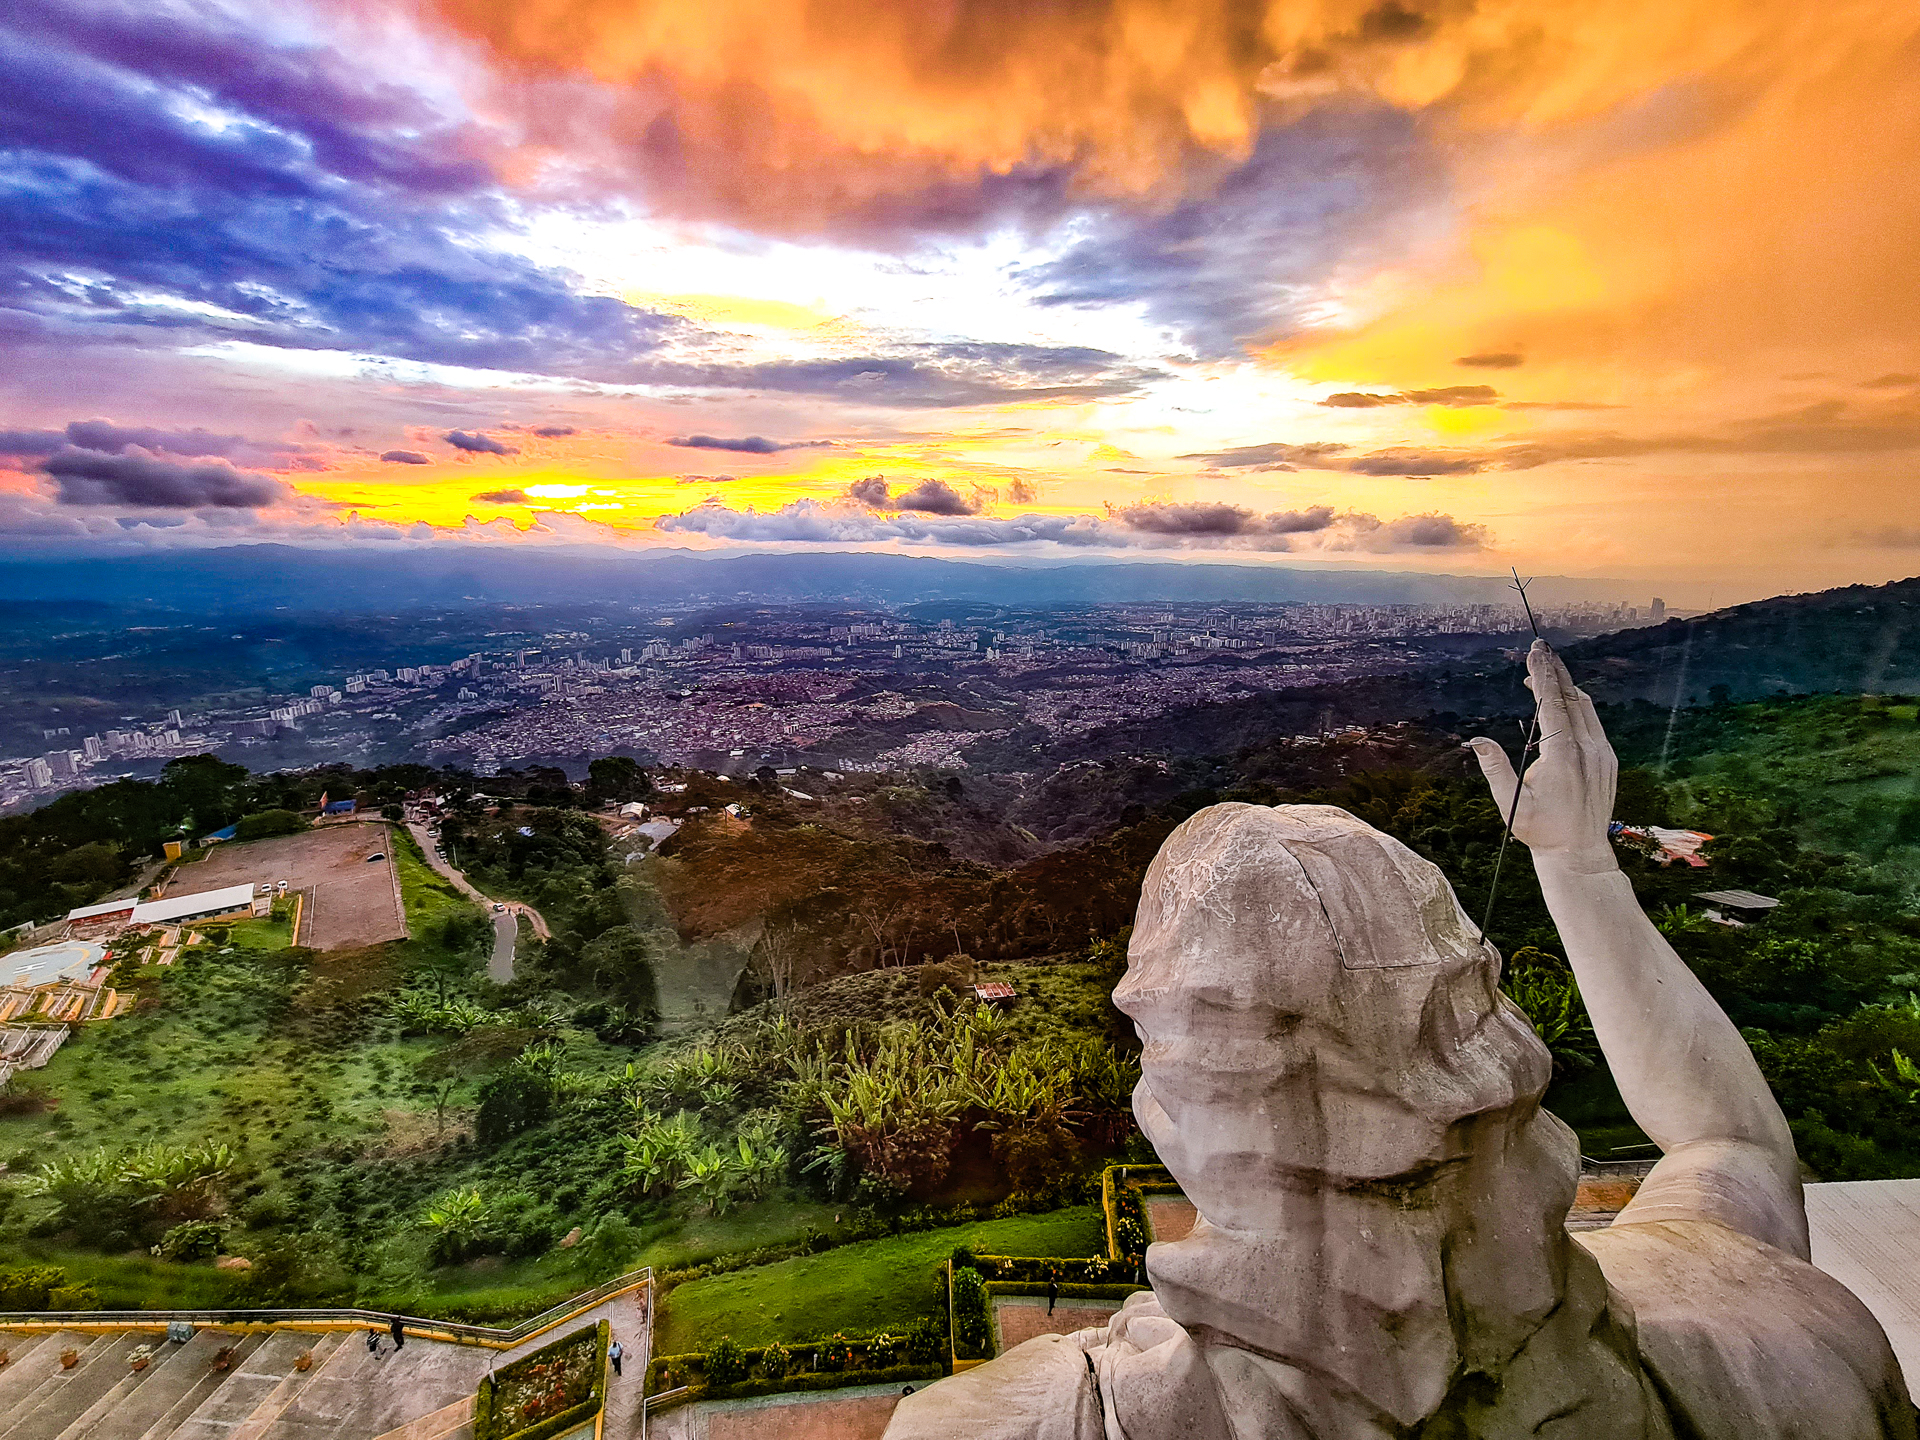 The statue of Jesus Christ at Cerro de Santisimo